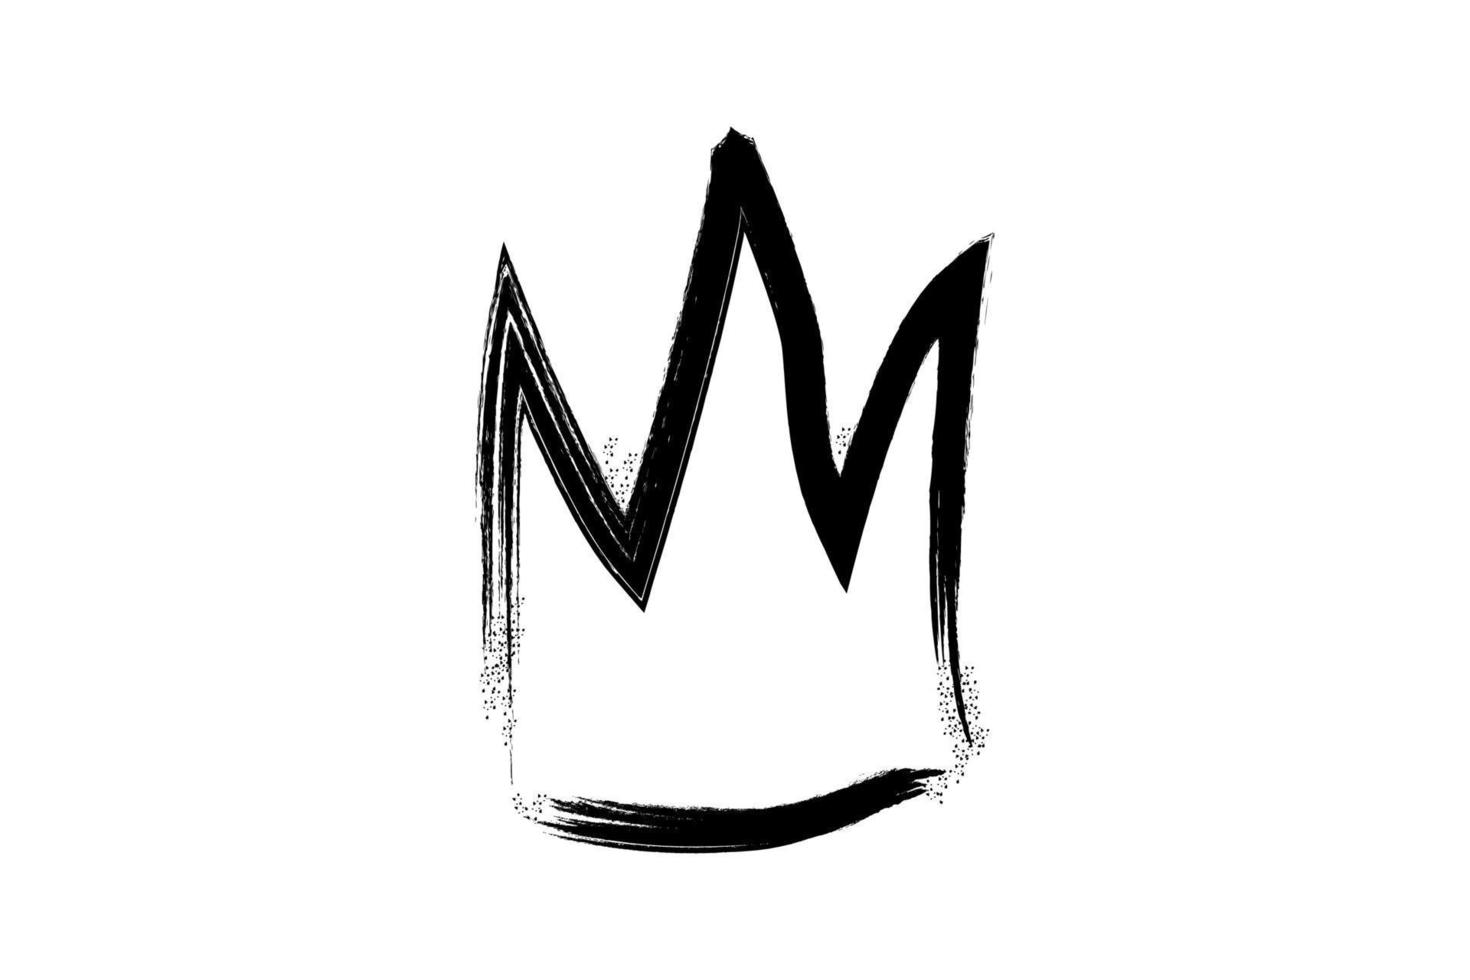 Crown icon. Vector illustration.